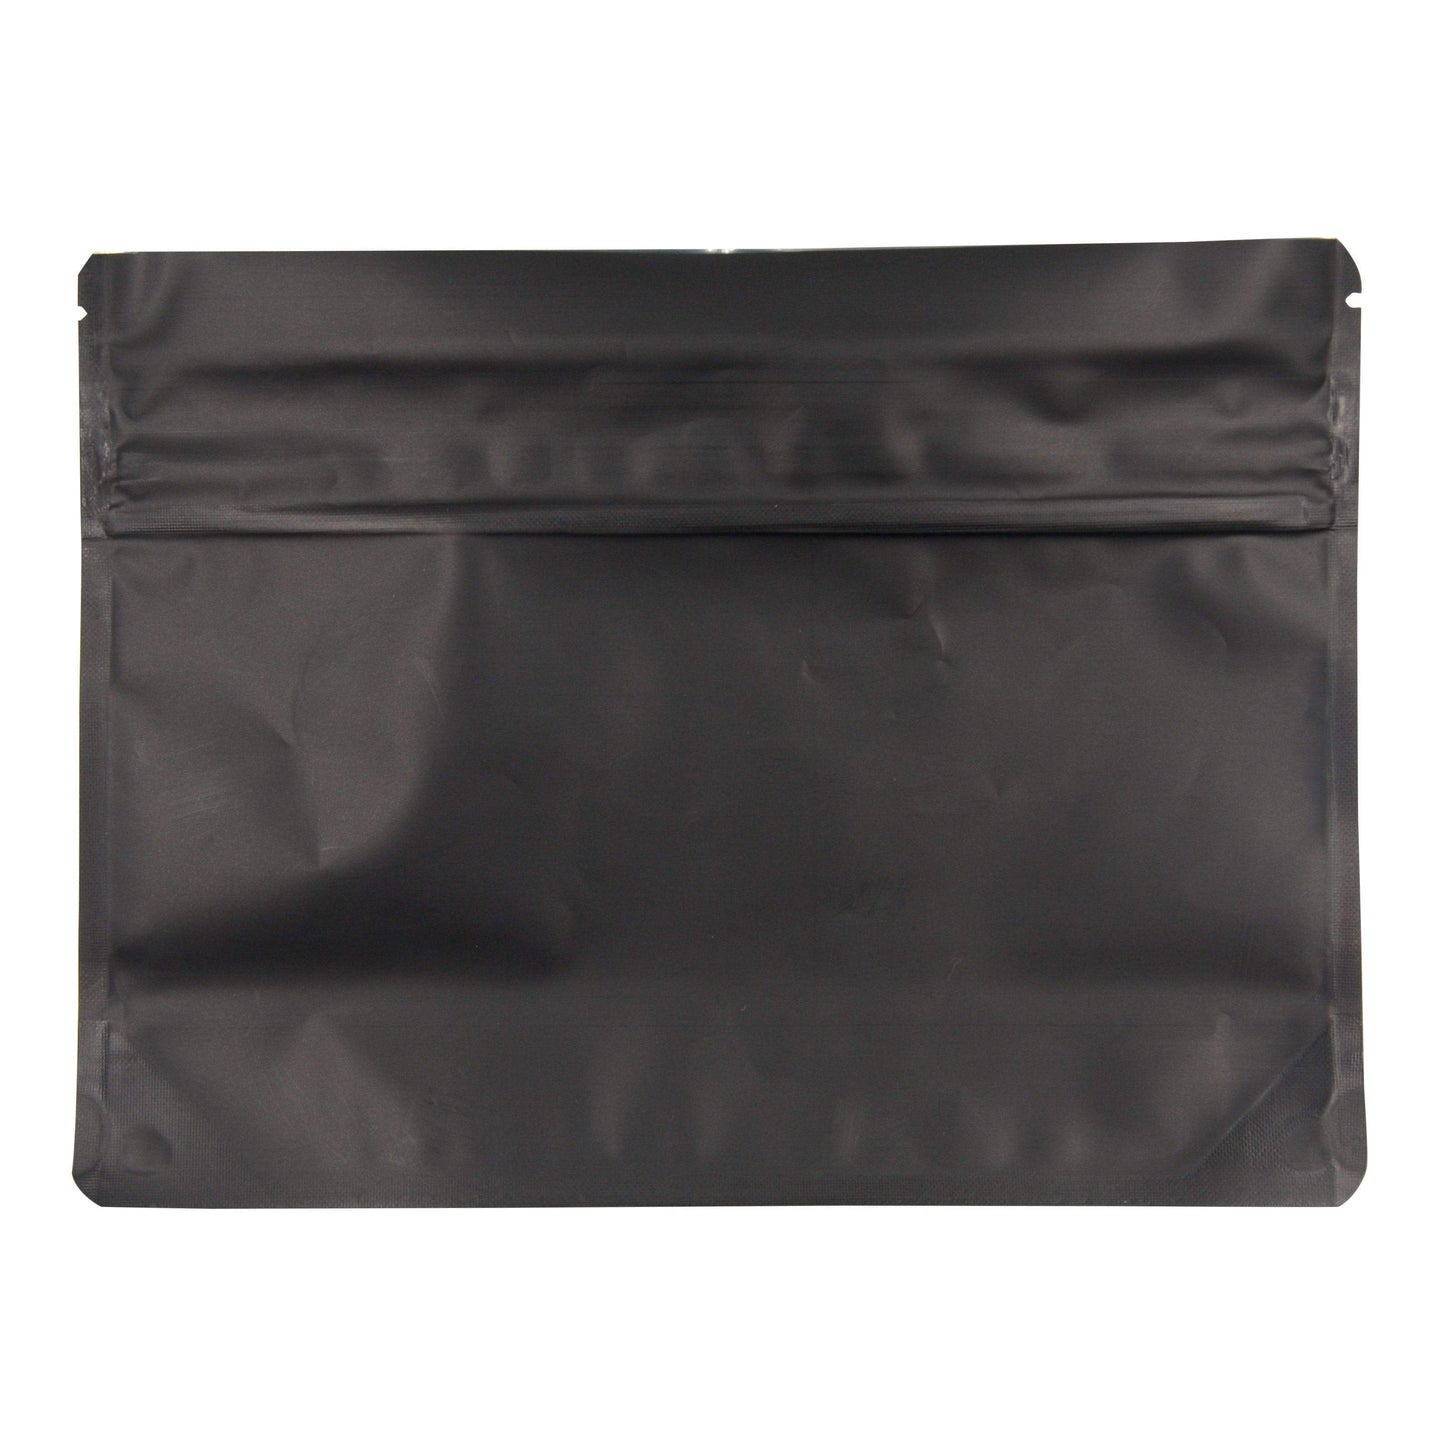 Matte Black Bag King Small Child-Resistant Opaque Mylar Exit Bag - 6" x 8"